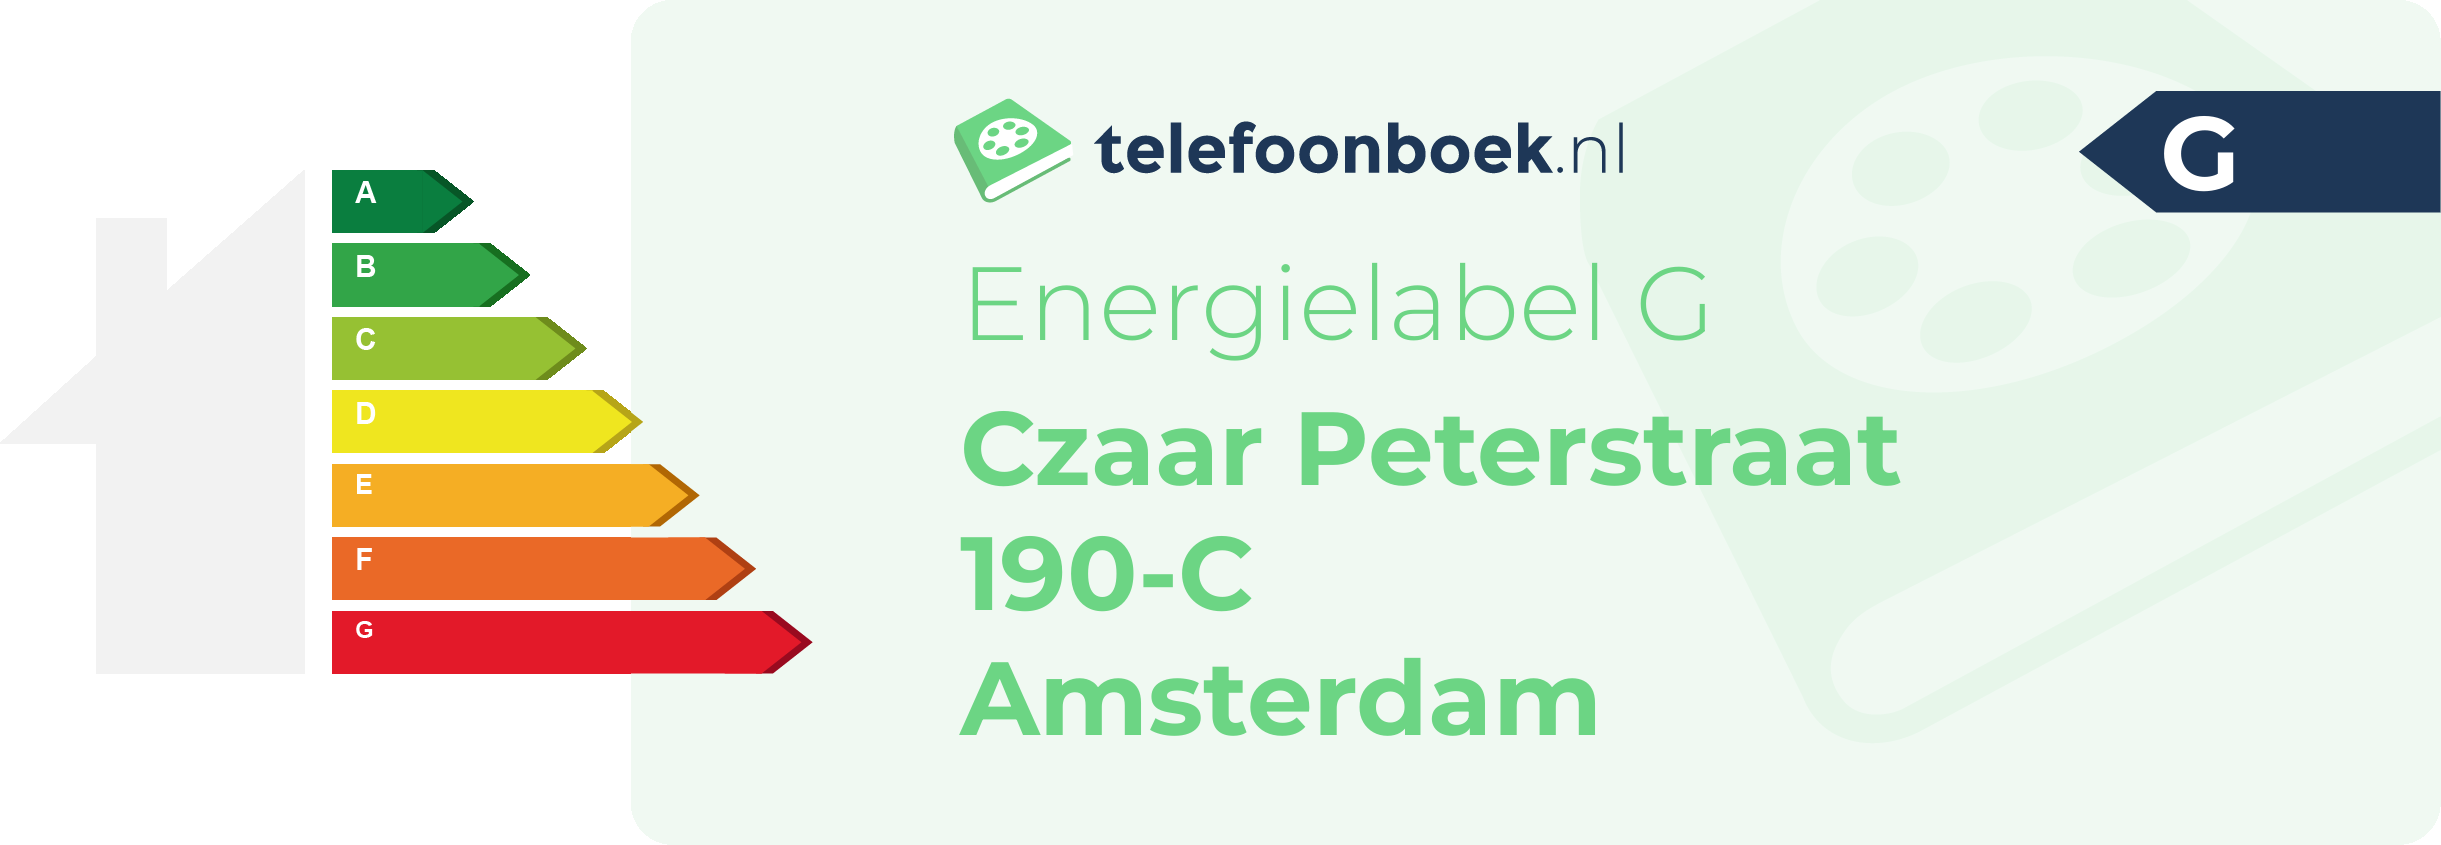 Energielabel Czaar Peterstraat 190-C Amsterdam